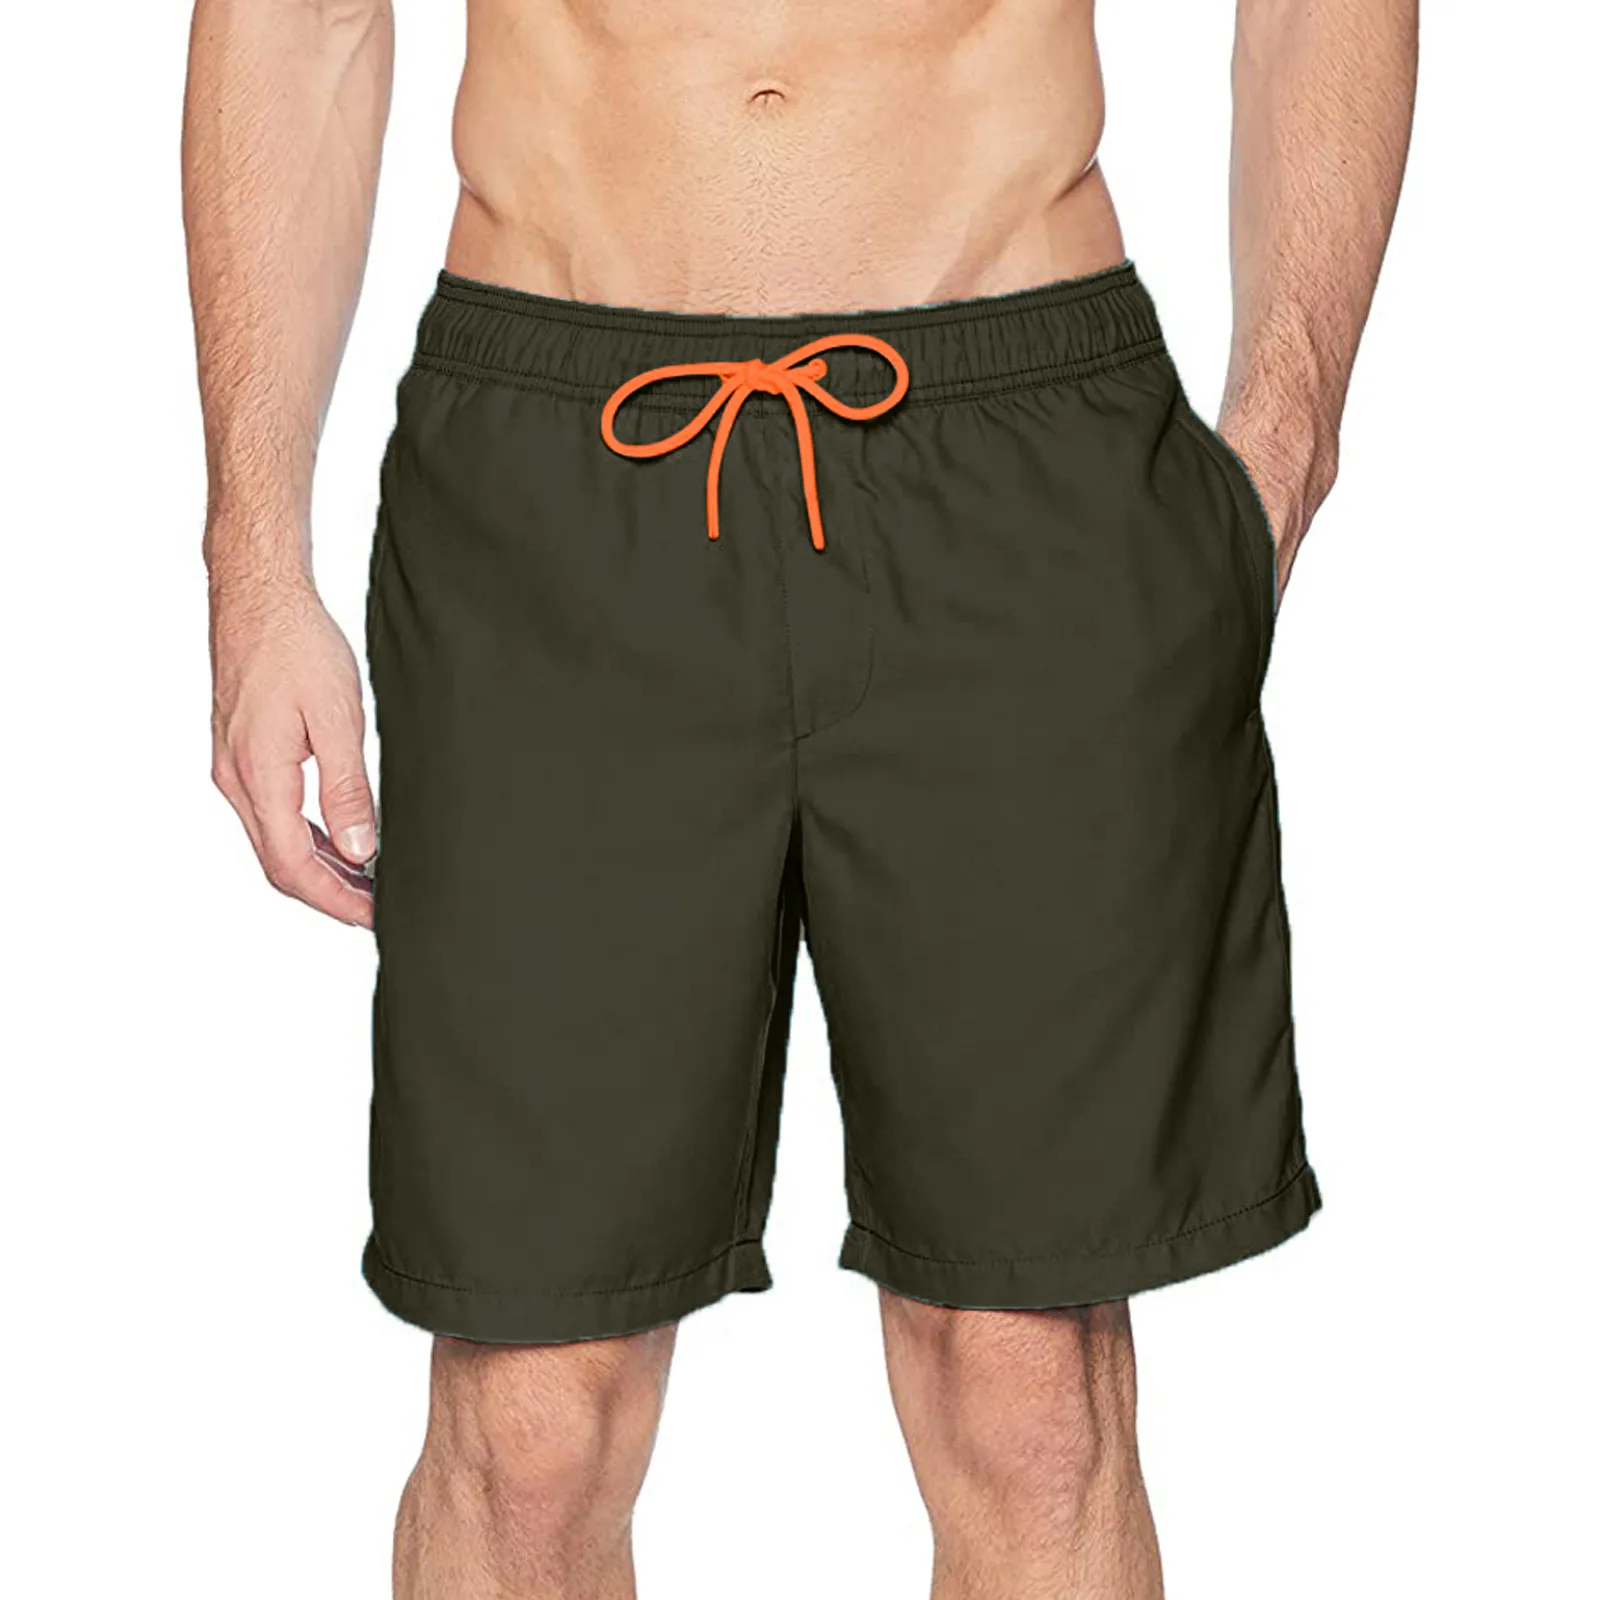 mens shorts short Swimwear gym Quick-drying Spring Swimming-trunks Beach-wear Summer Bathing-suit Rash-guard sports surf Bermuda